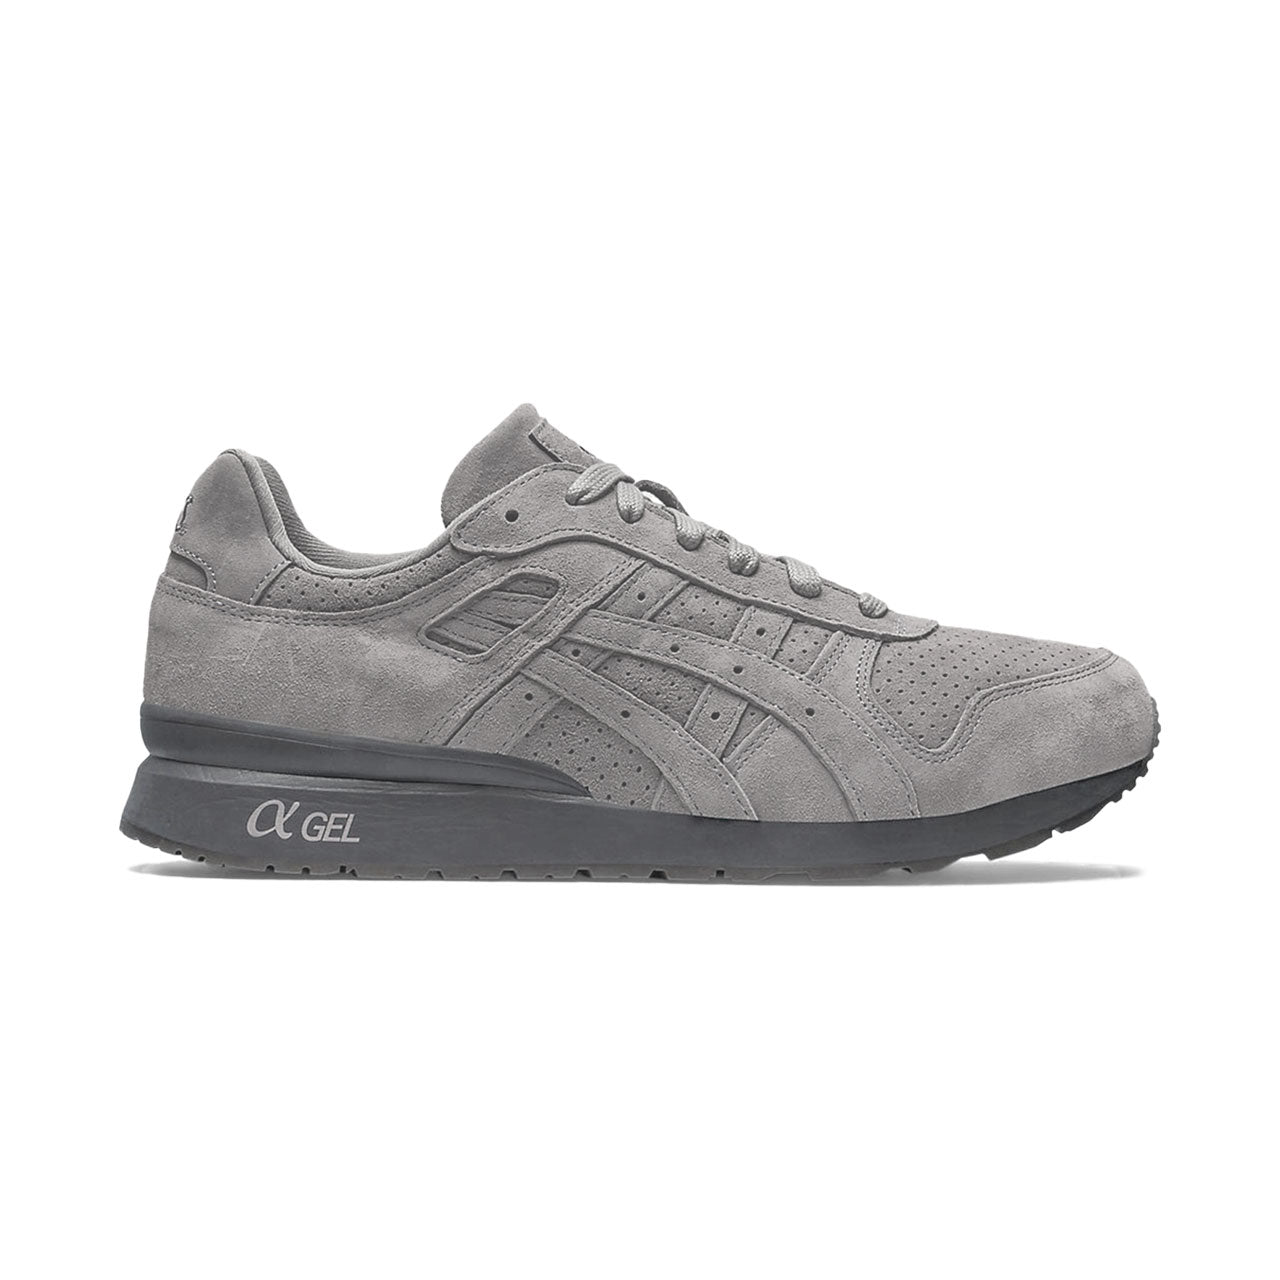 ASICS GT-II Clay Grey Sneakers